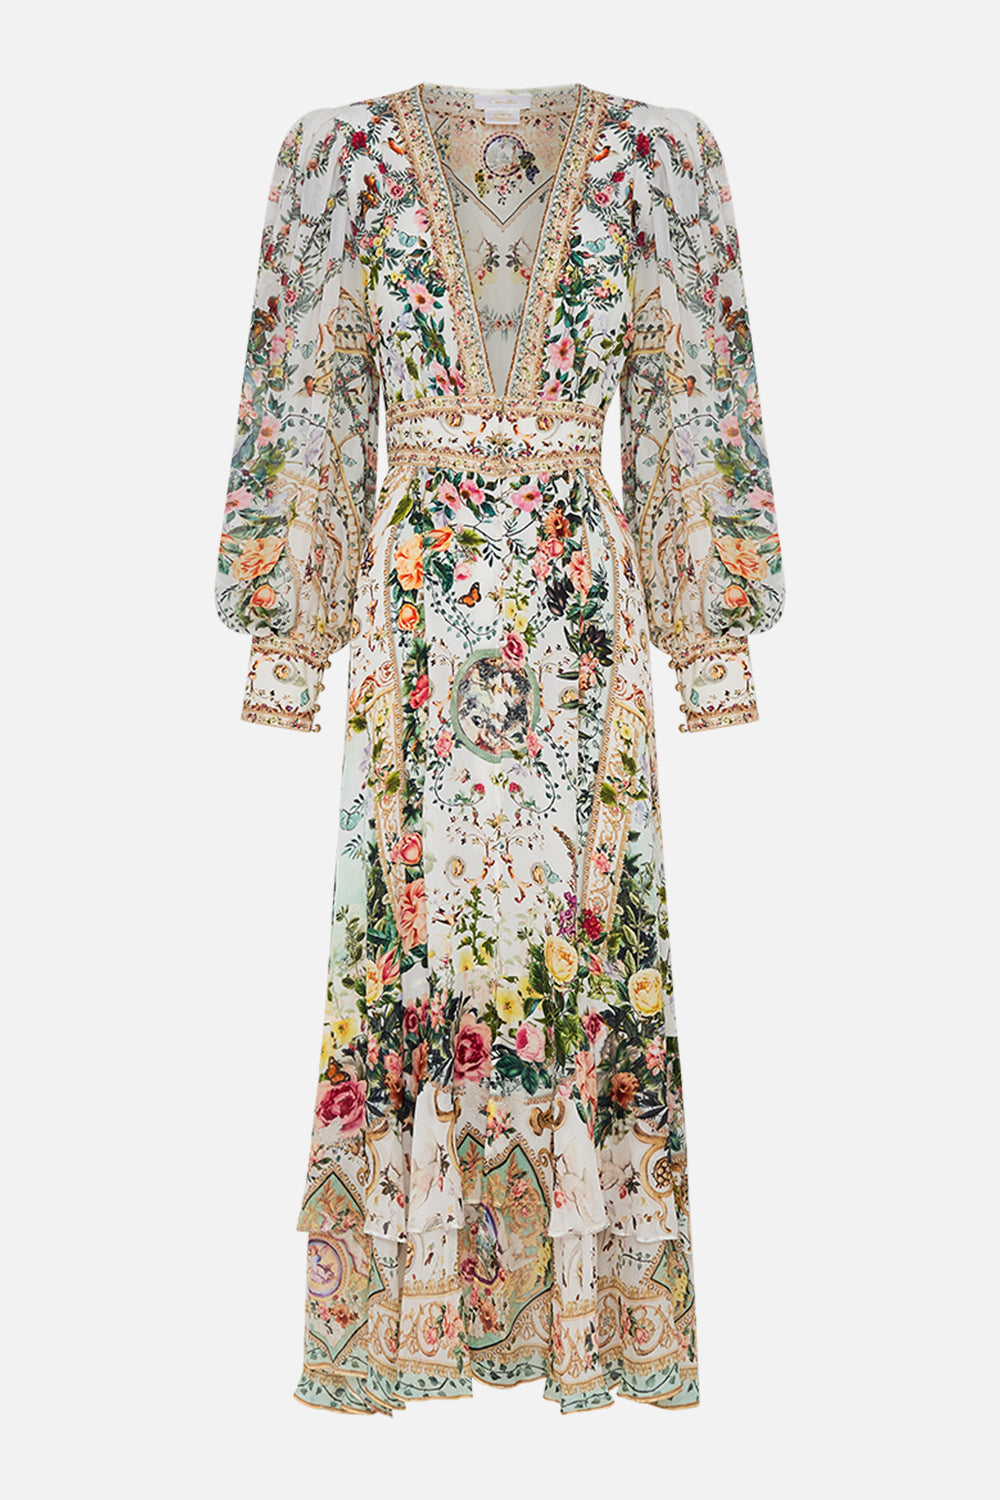 Product view of CAMILLA silk maxi dress in Renaissance Romance print